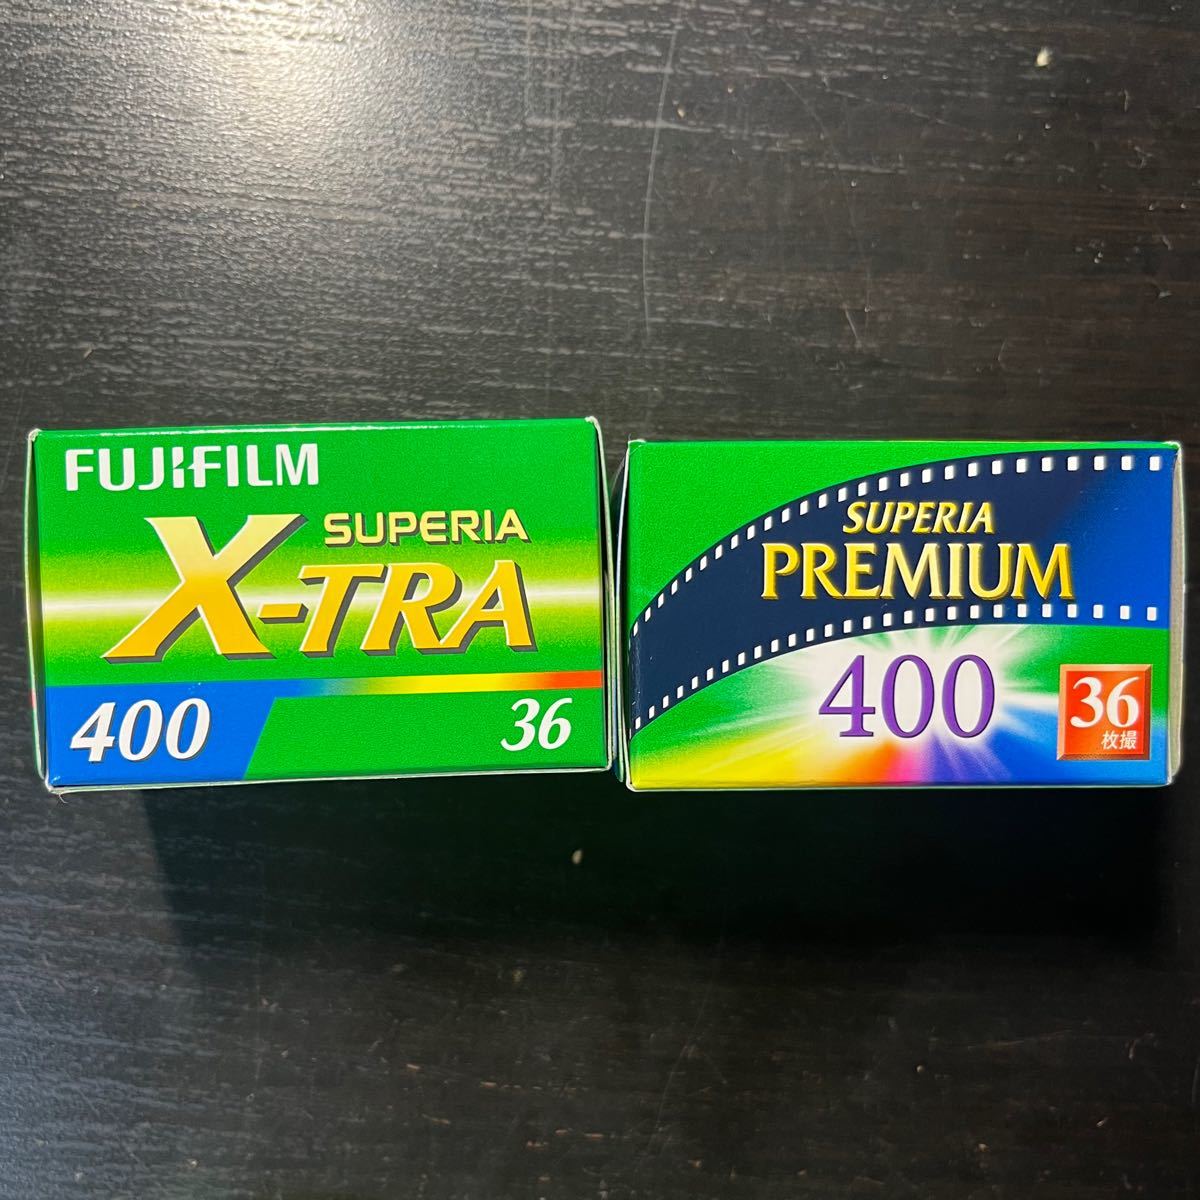 FUJIFILM superia premium 400 x-tra 36枚撮り 35mmカラーネガフィルム